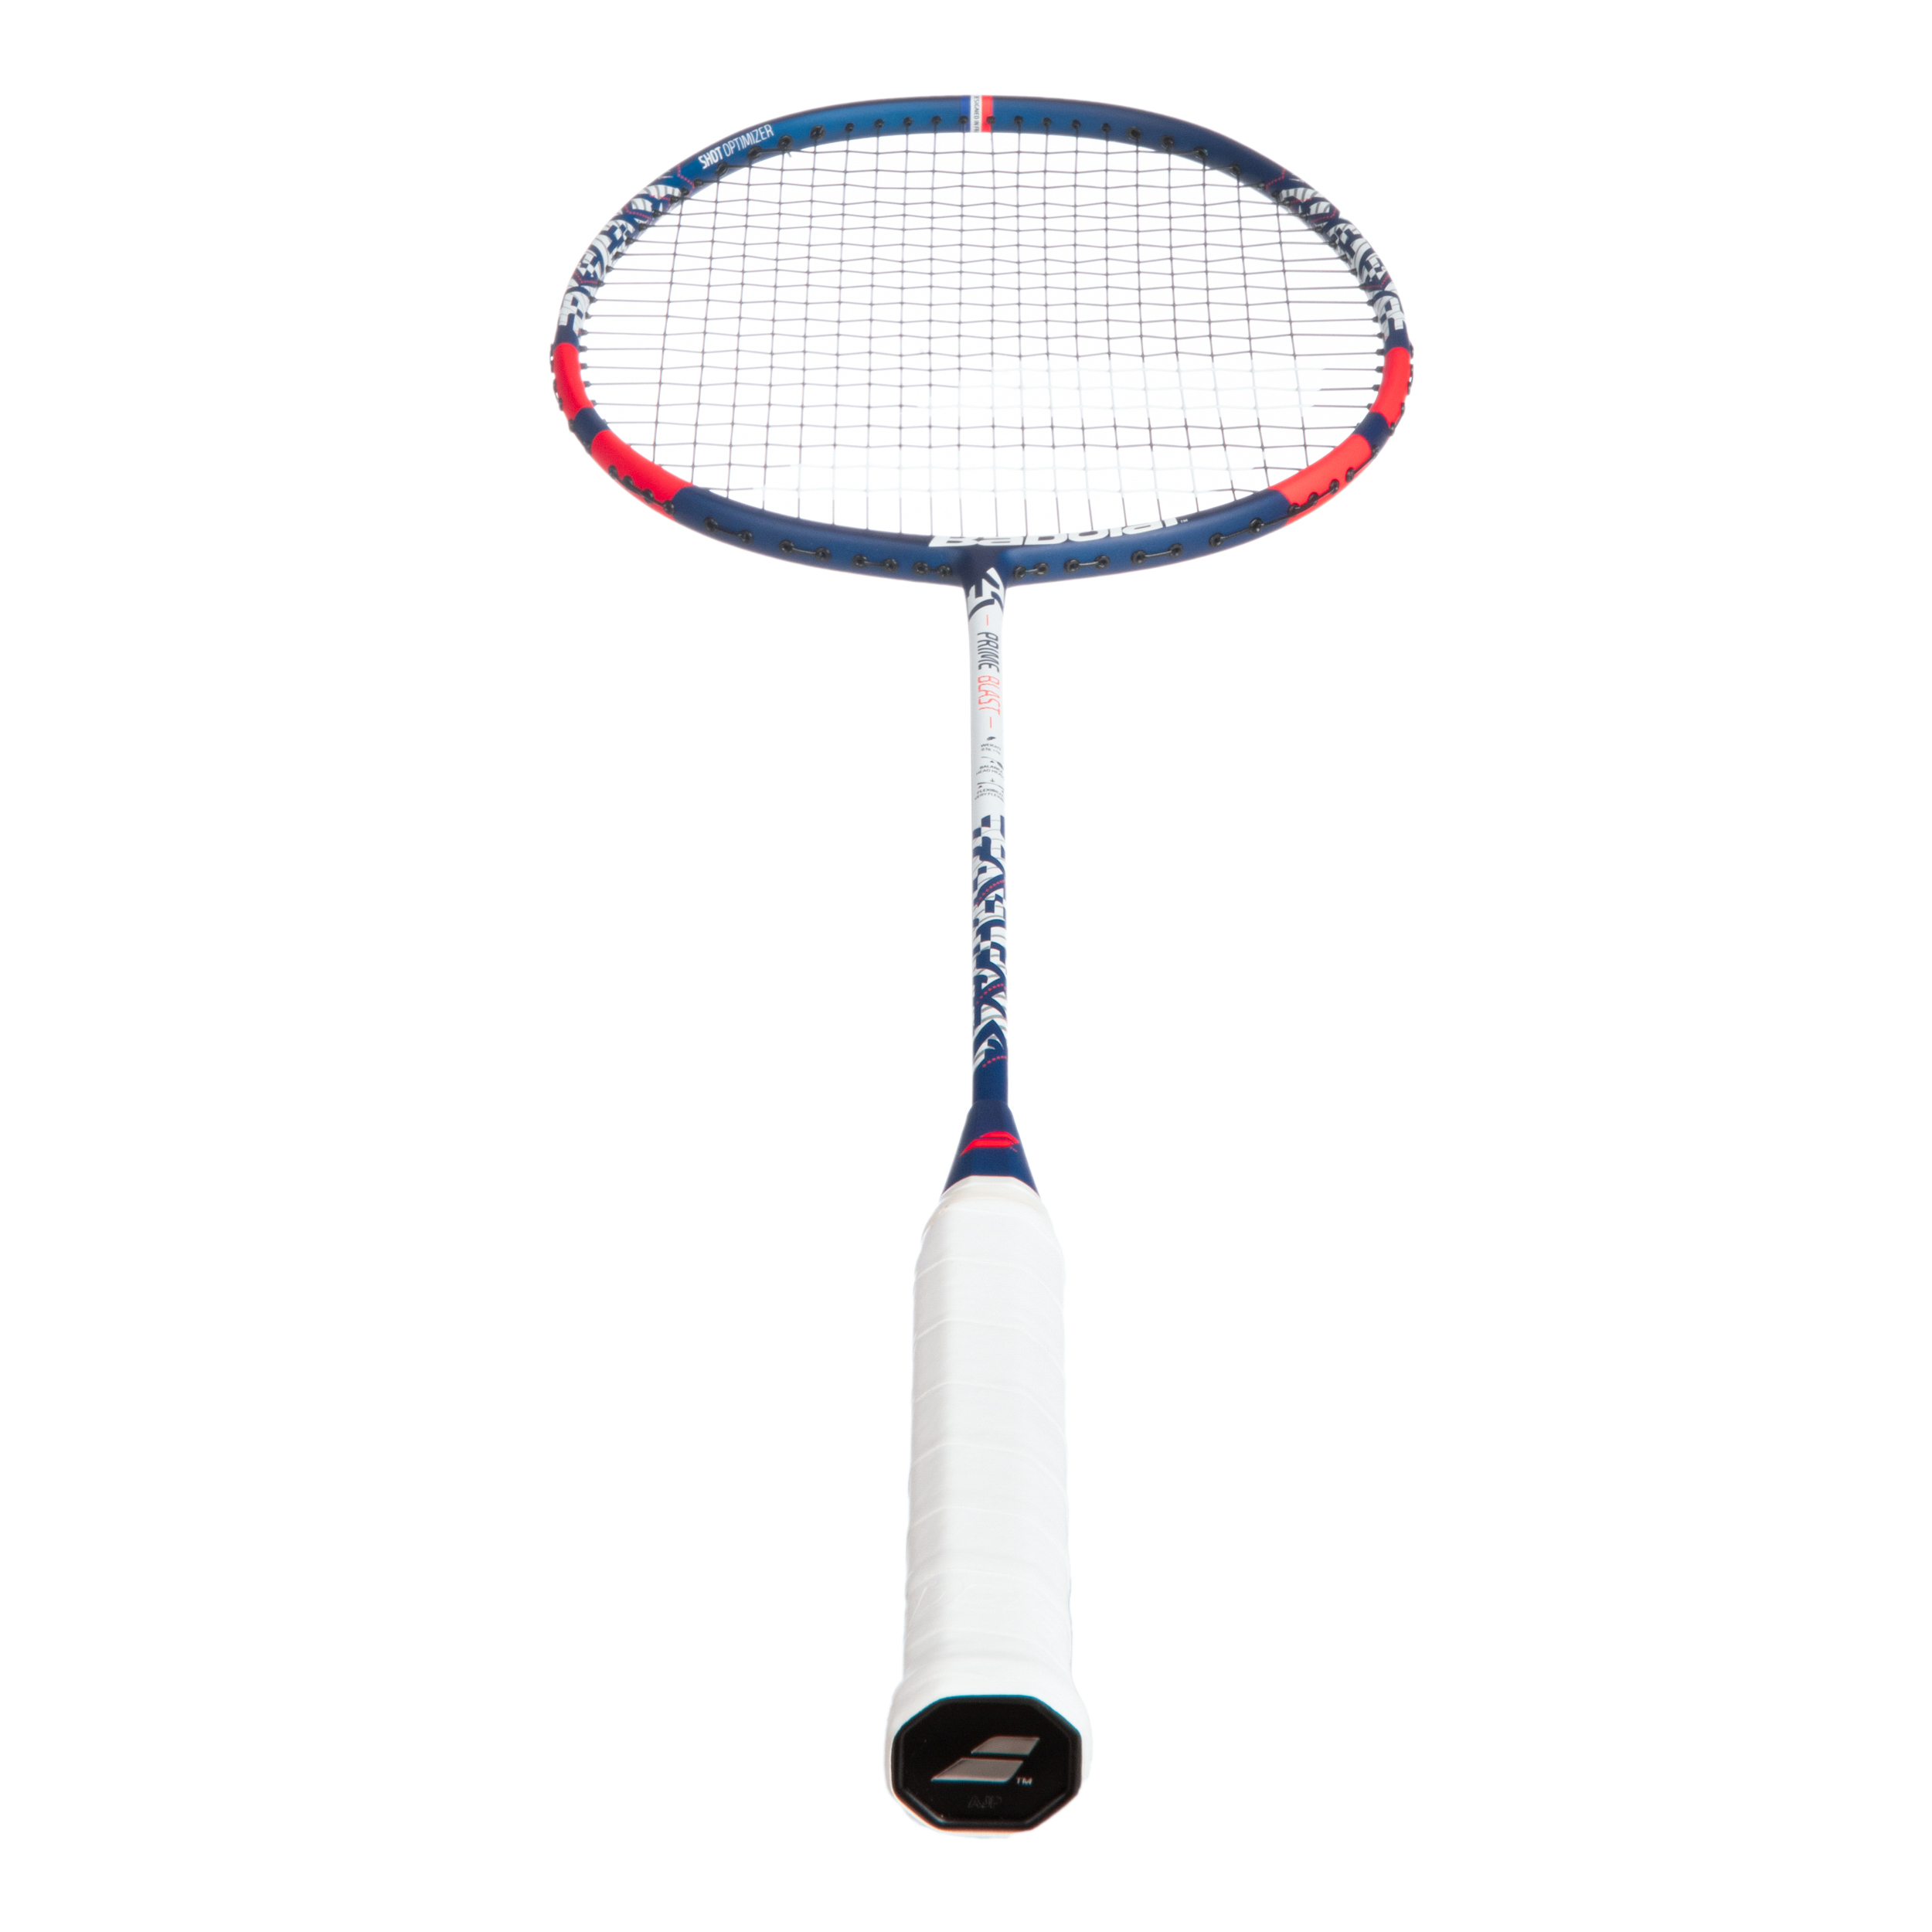 Sac Badminton Babolat 30 raquettes - AS Équipement sportif